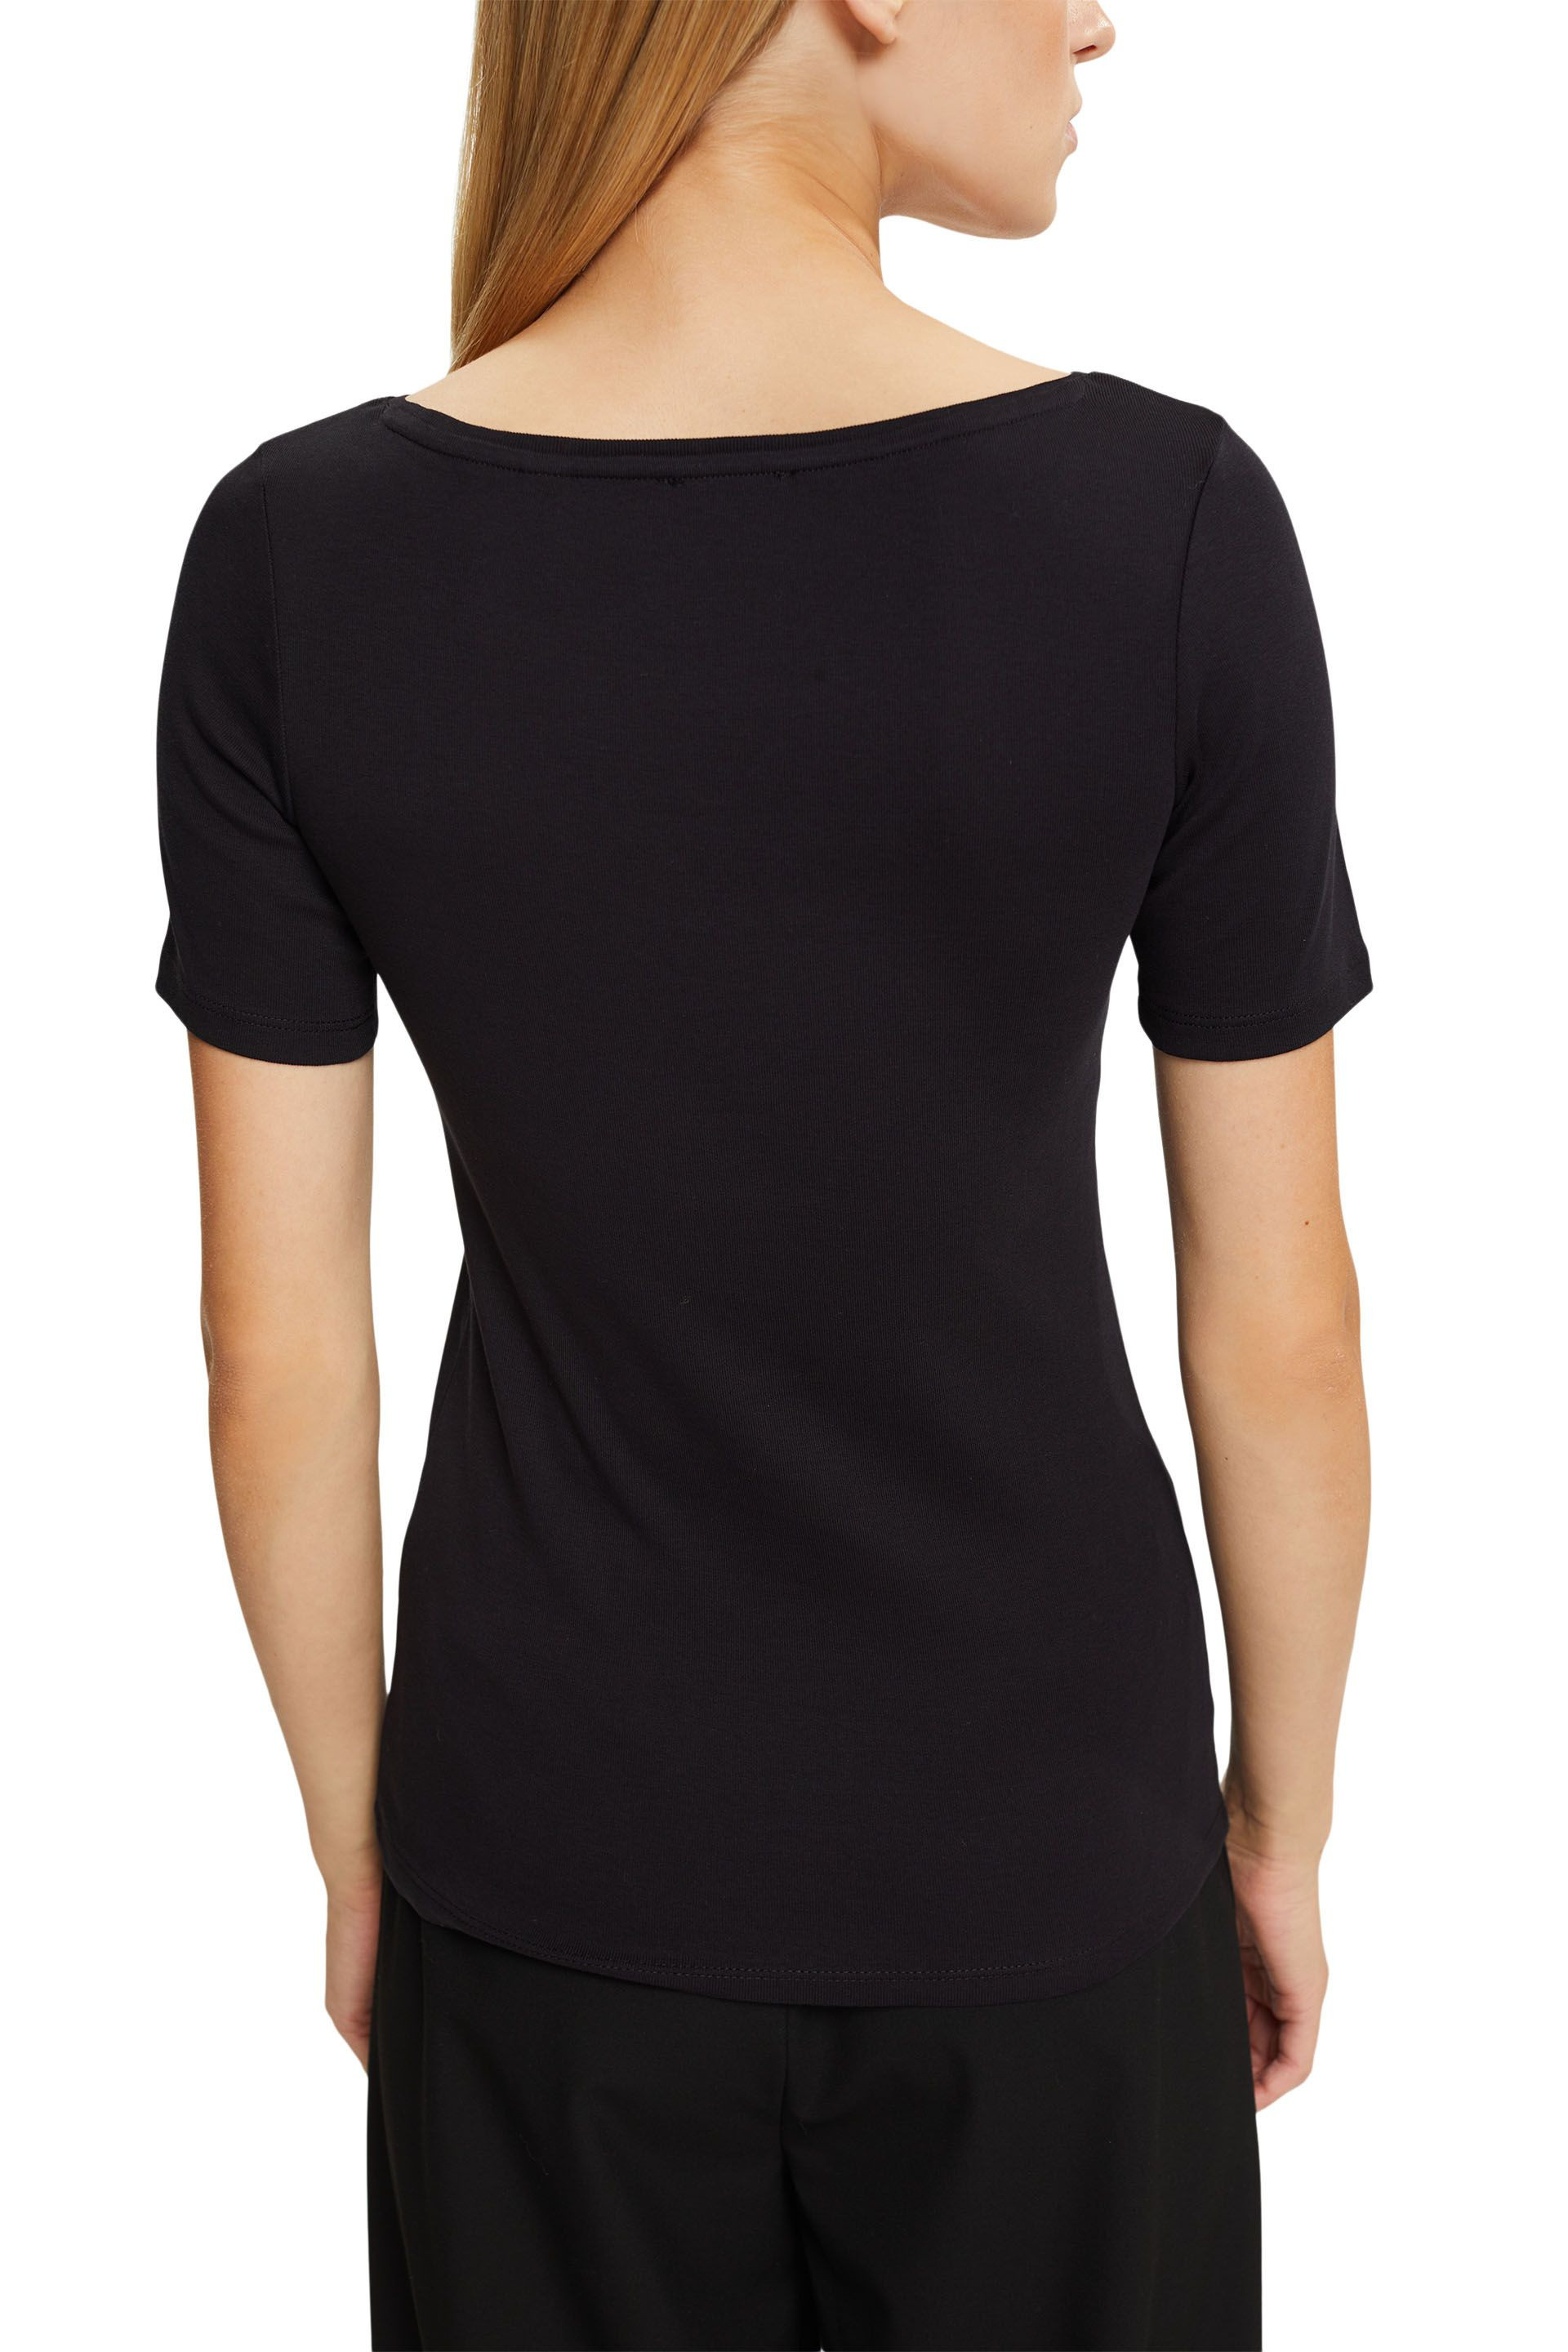 Esprit - Cotton logo T-shirt, Black, large image number 2